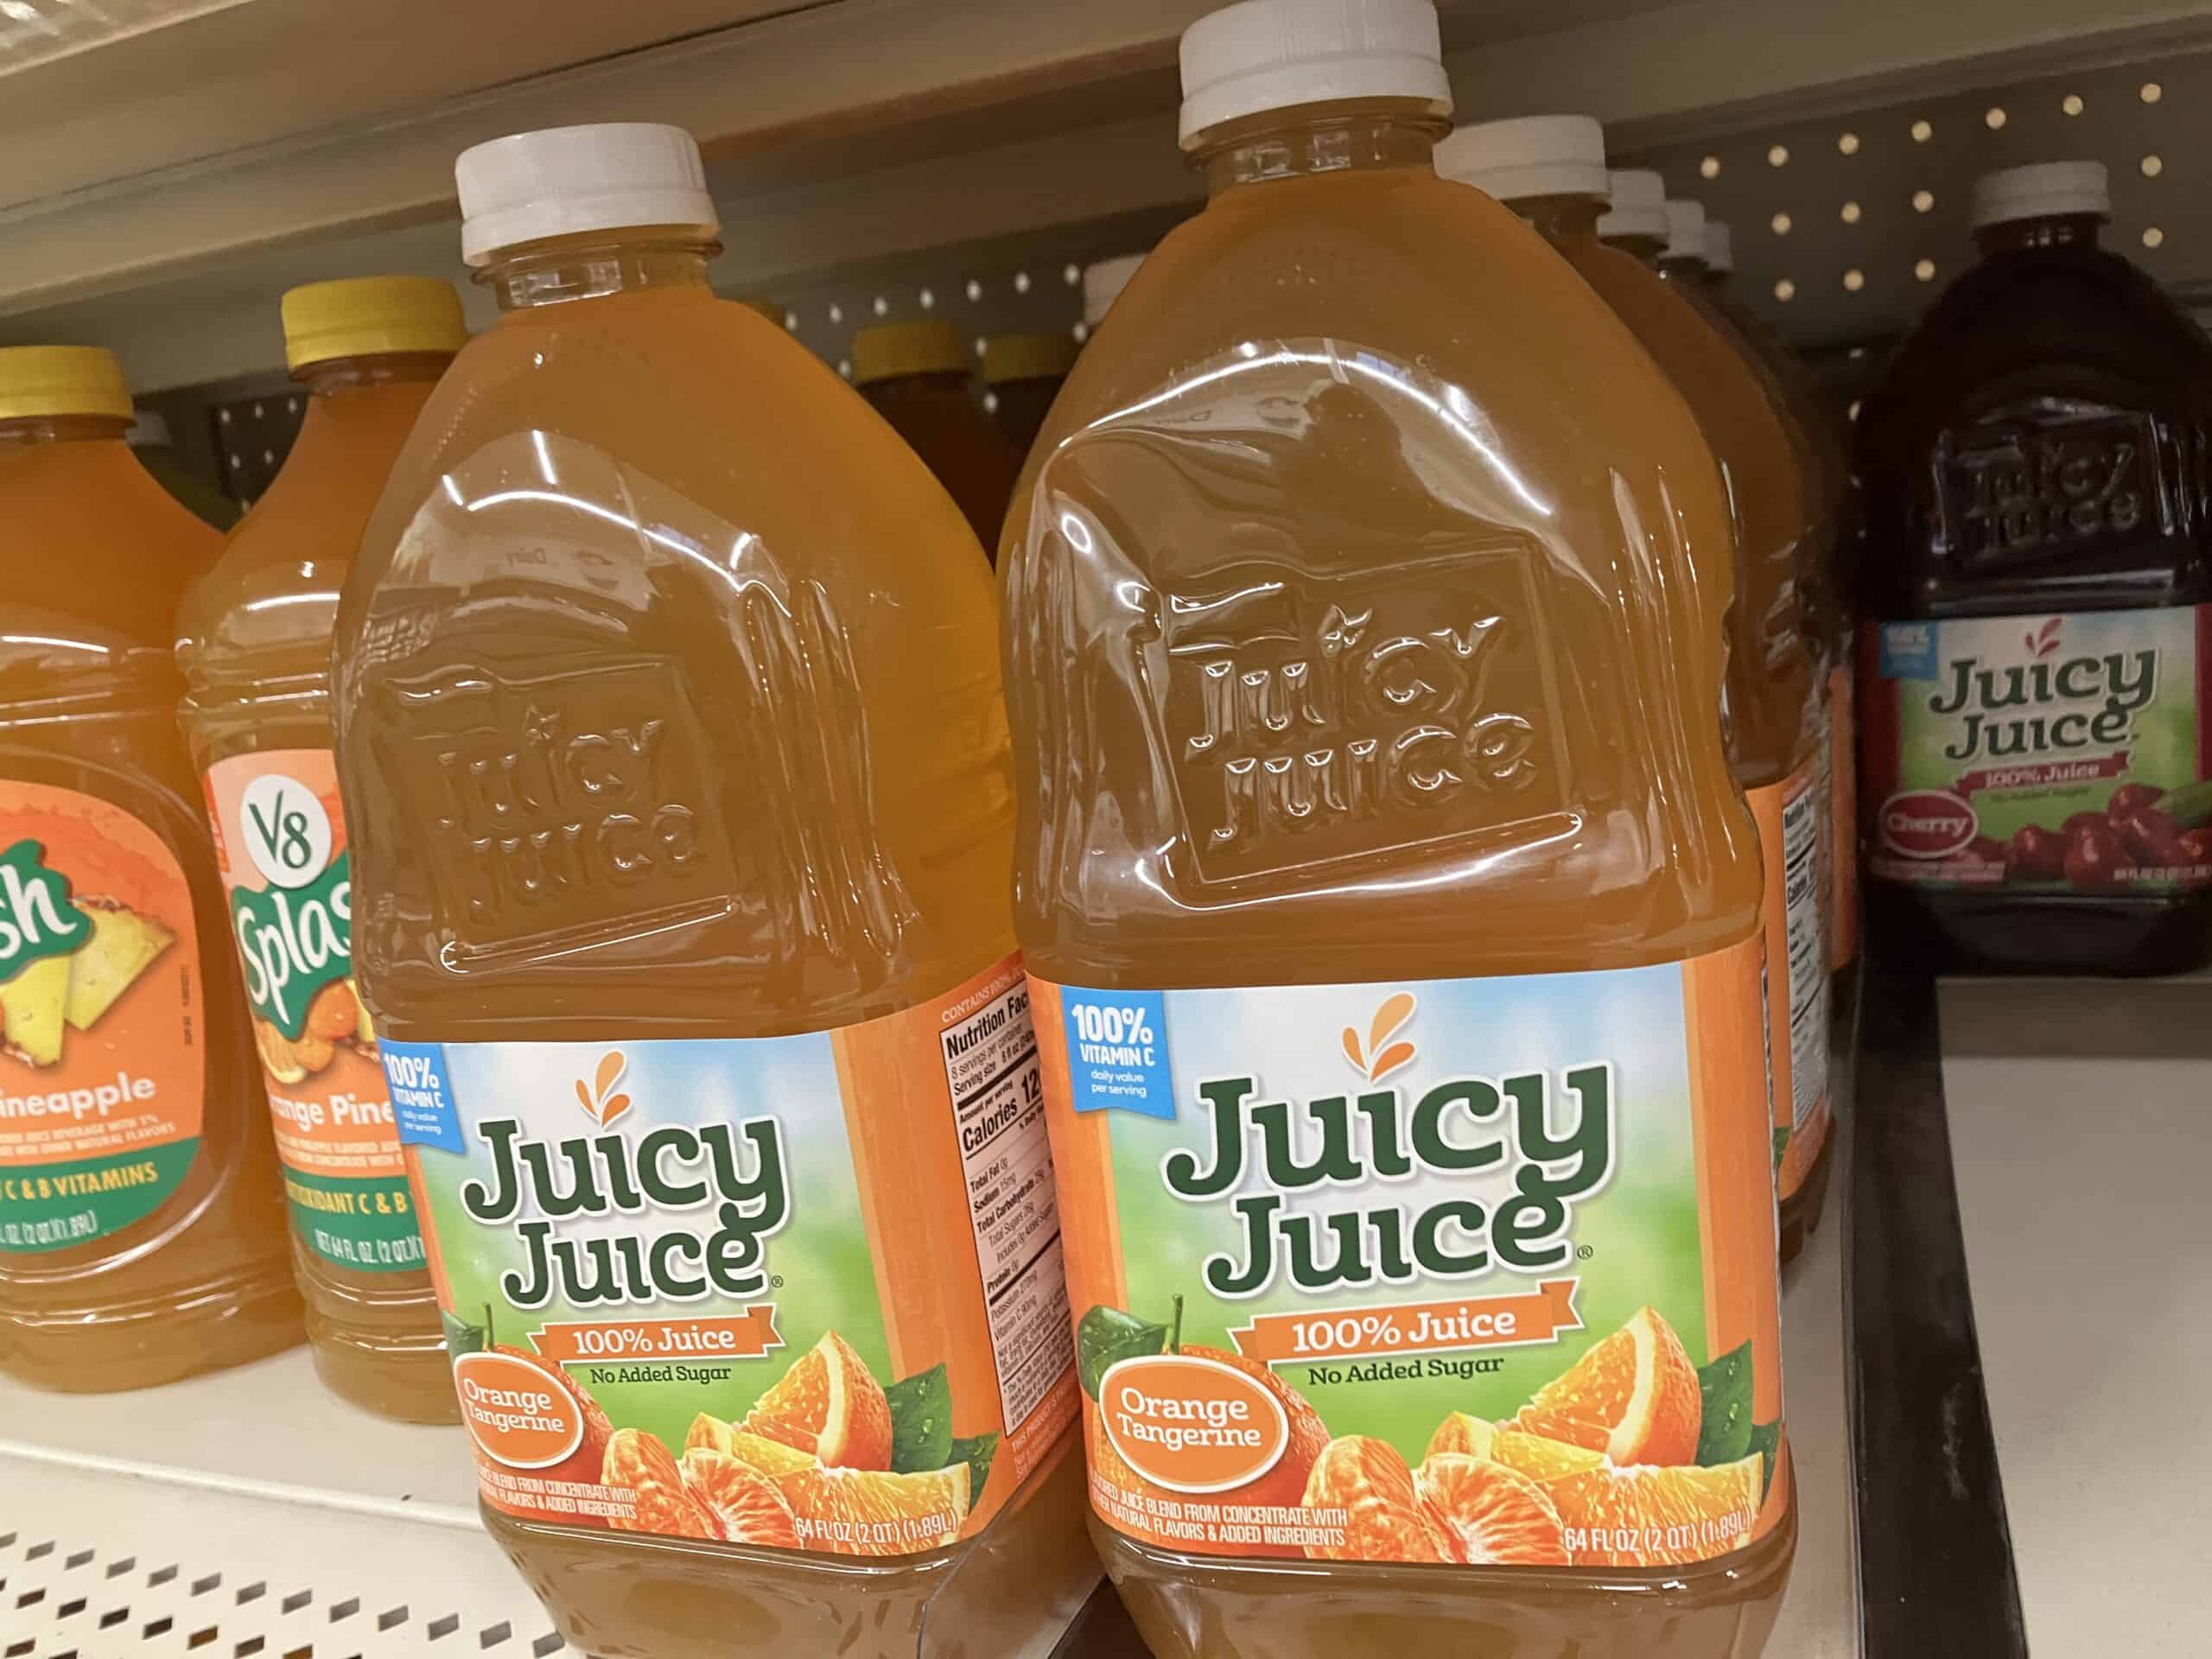 Juicy Juice Orange Tangerine